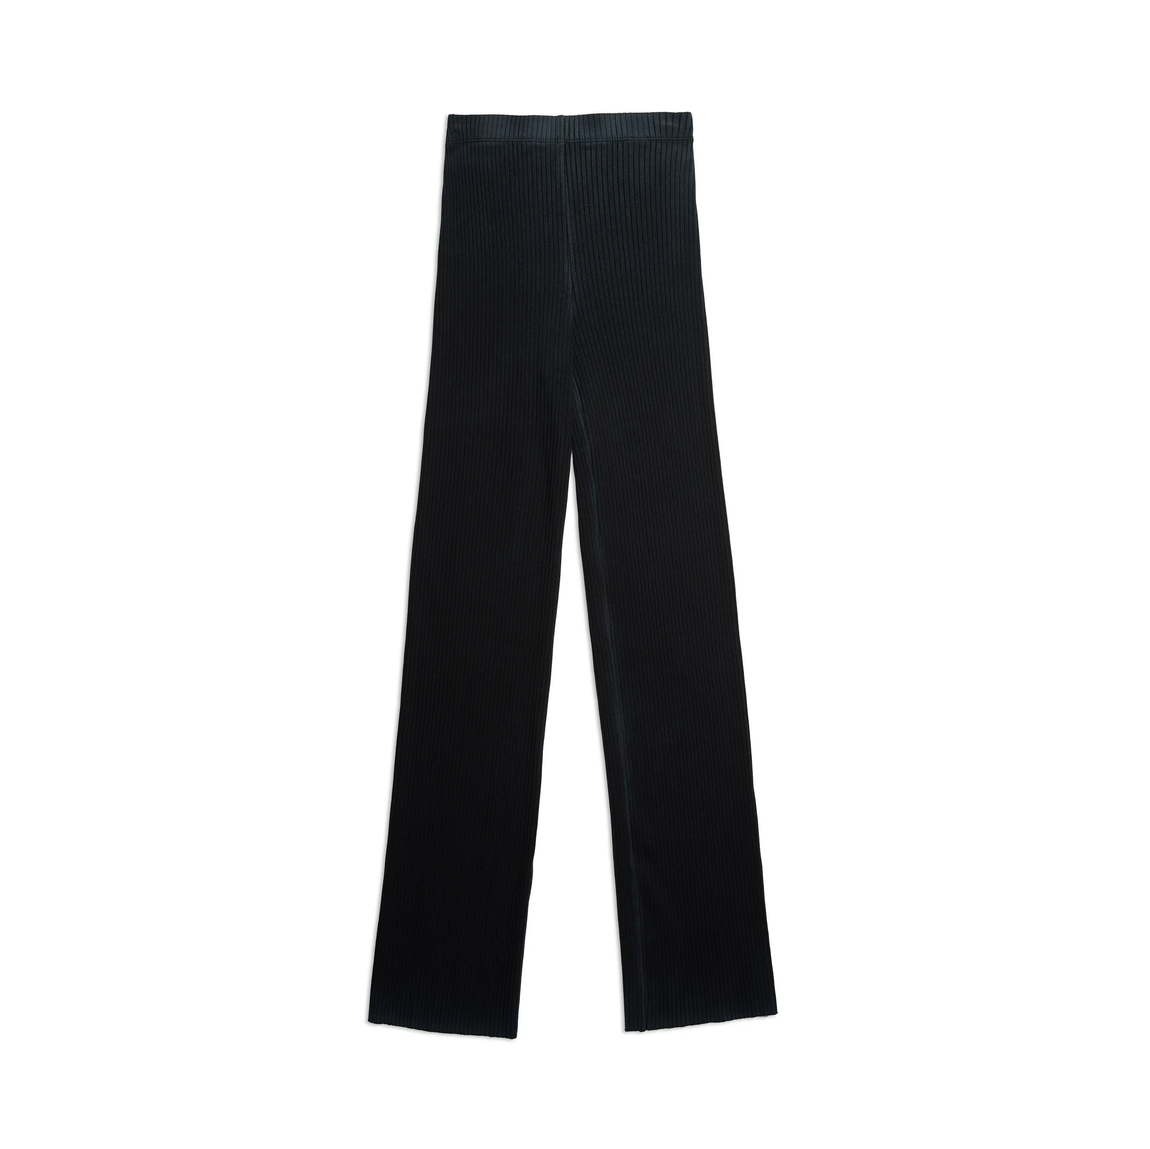 Cotton Citizen Women's Ibiza Pants (Vintage Black) - Cotton Citizen Women's Ibiza Pants (Vintage Black) - 